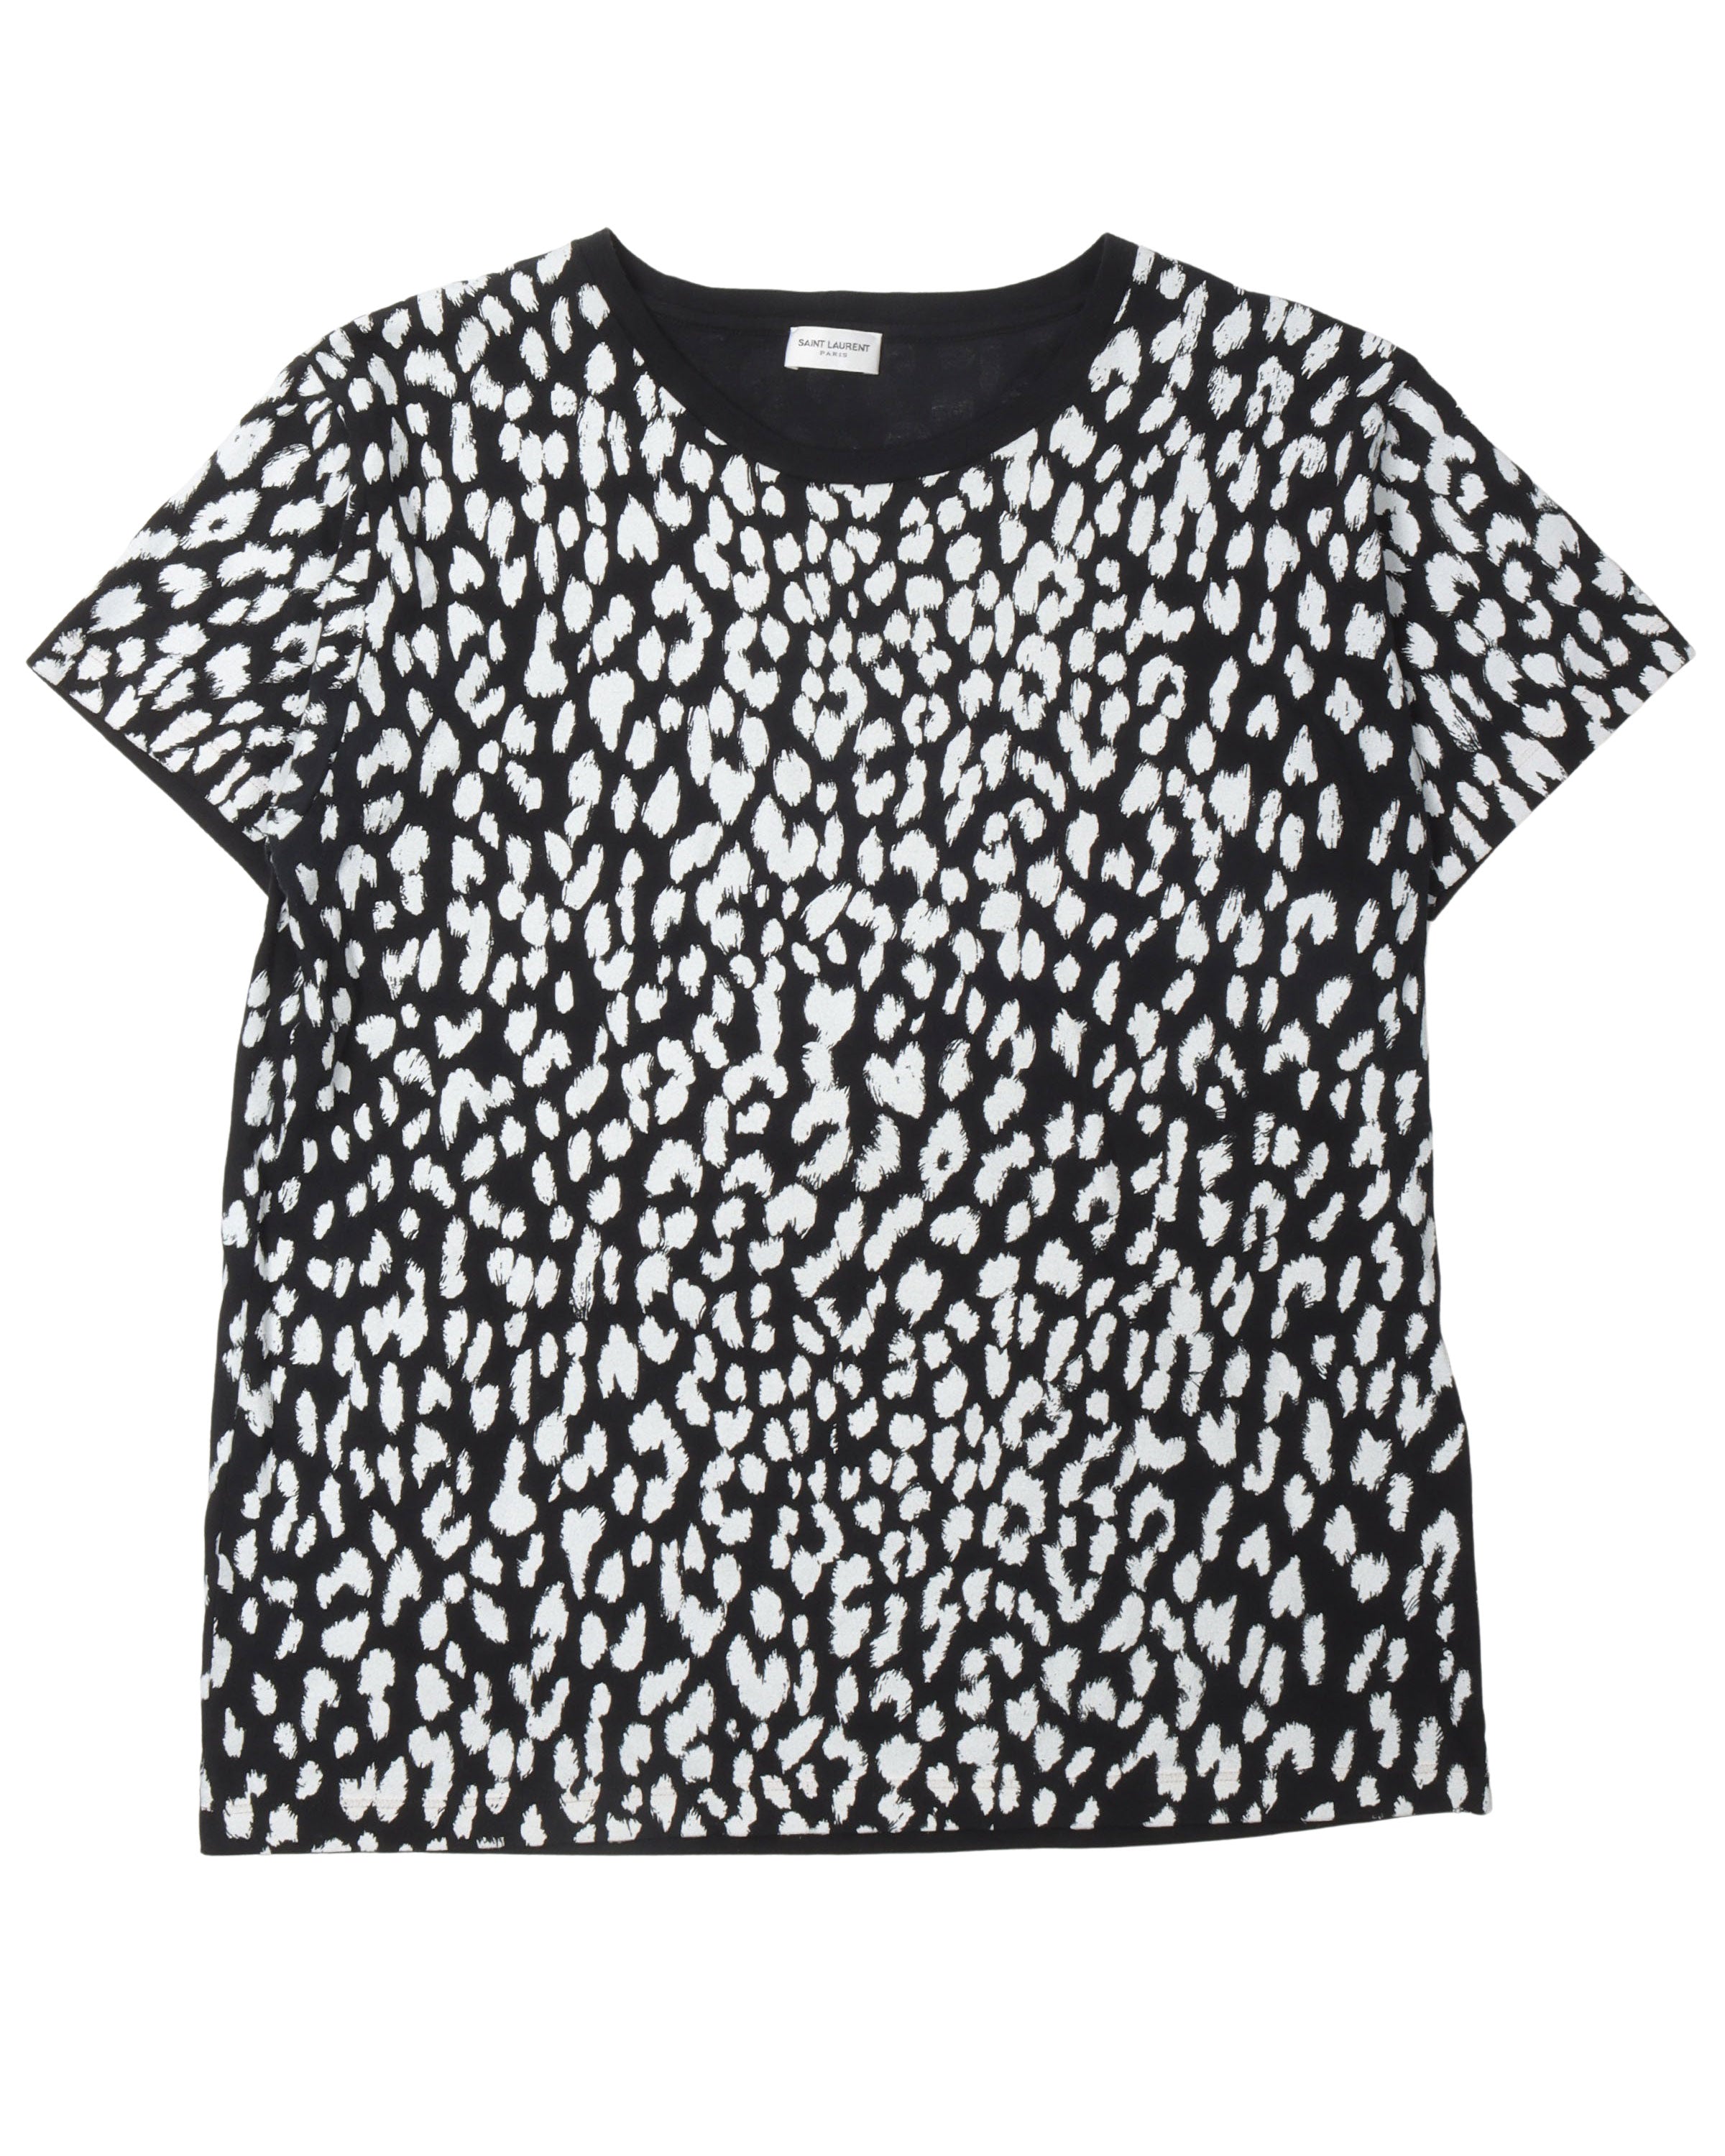 Saint Laurent Cheetah Print T-Shirt